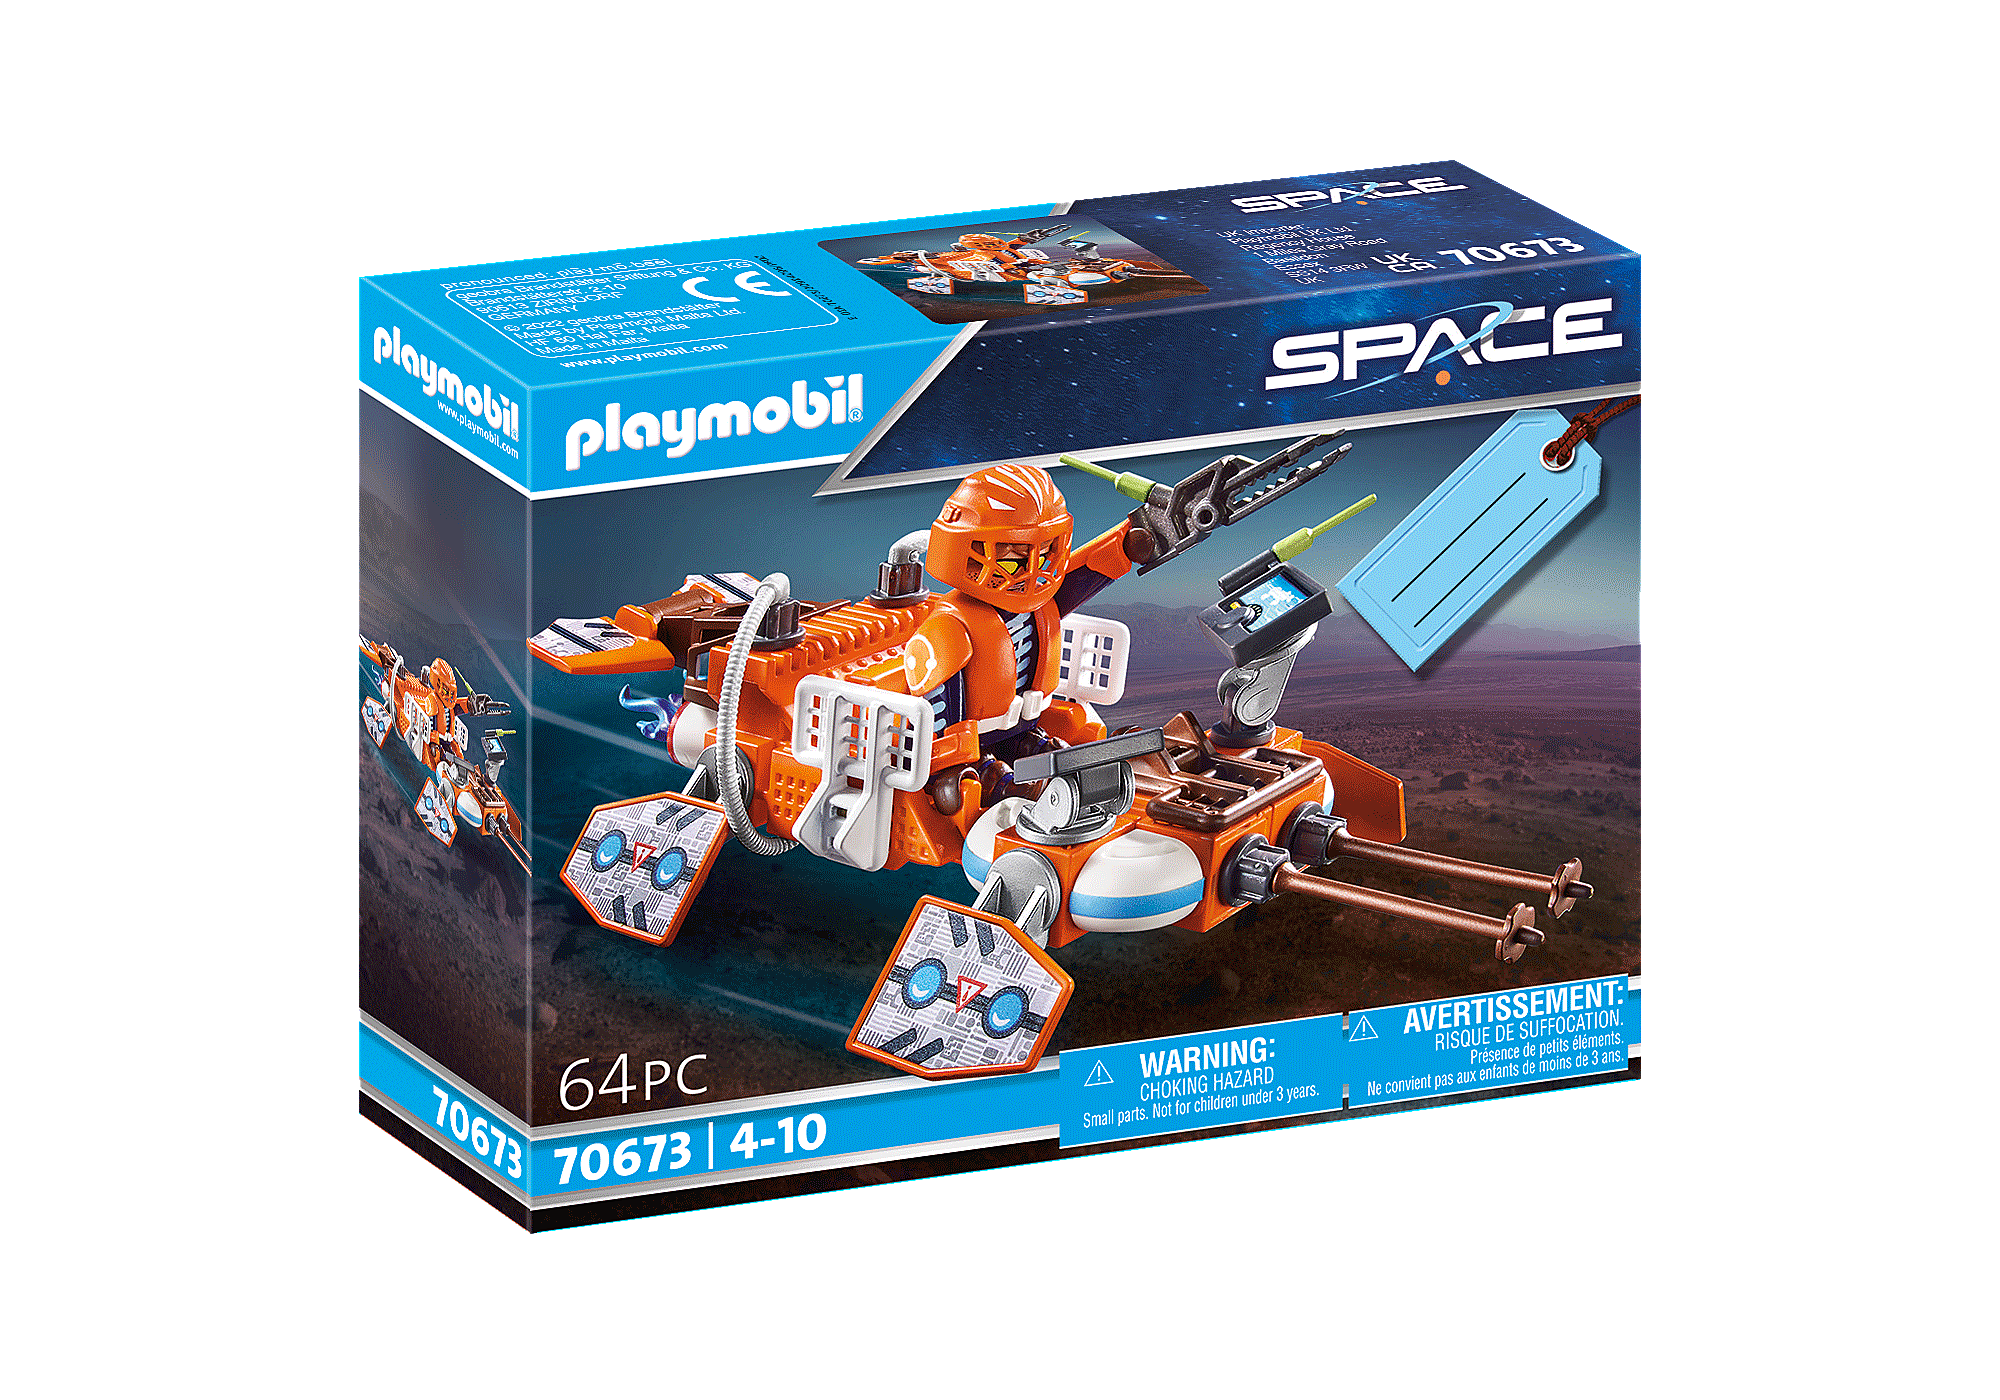 Space Gift Set - 70673 | PLAYMOBIL®